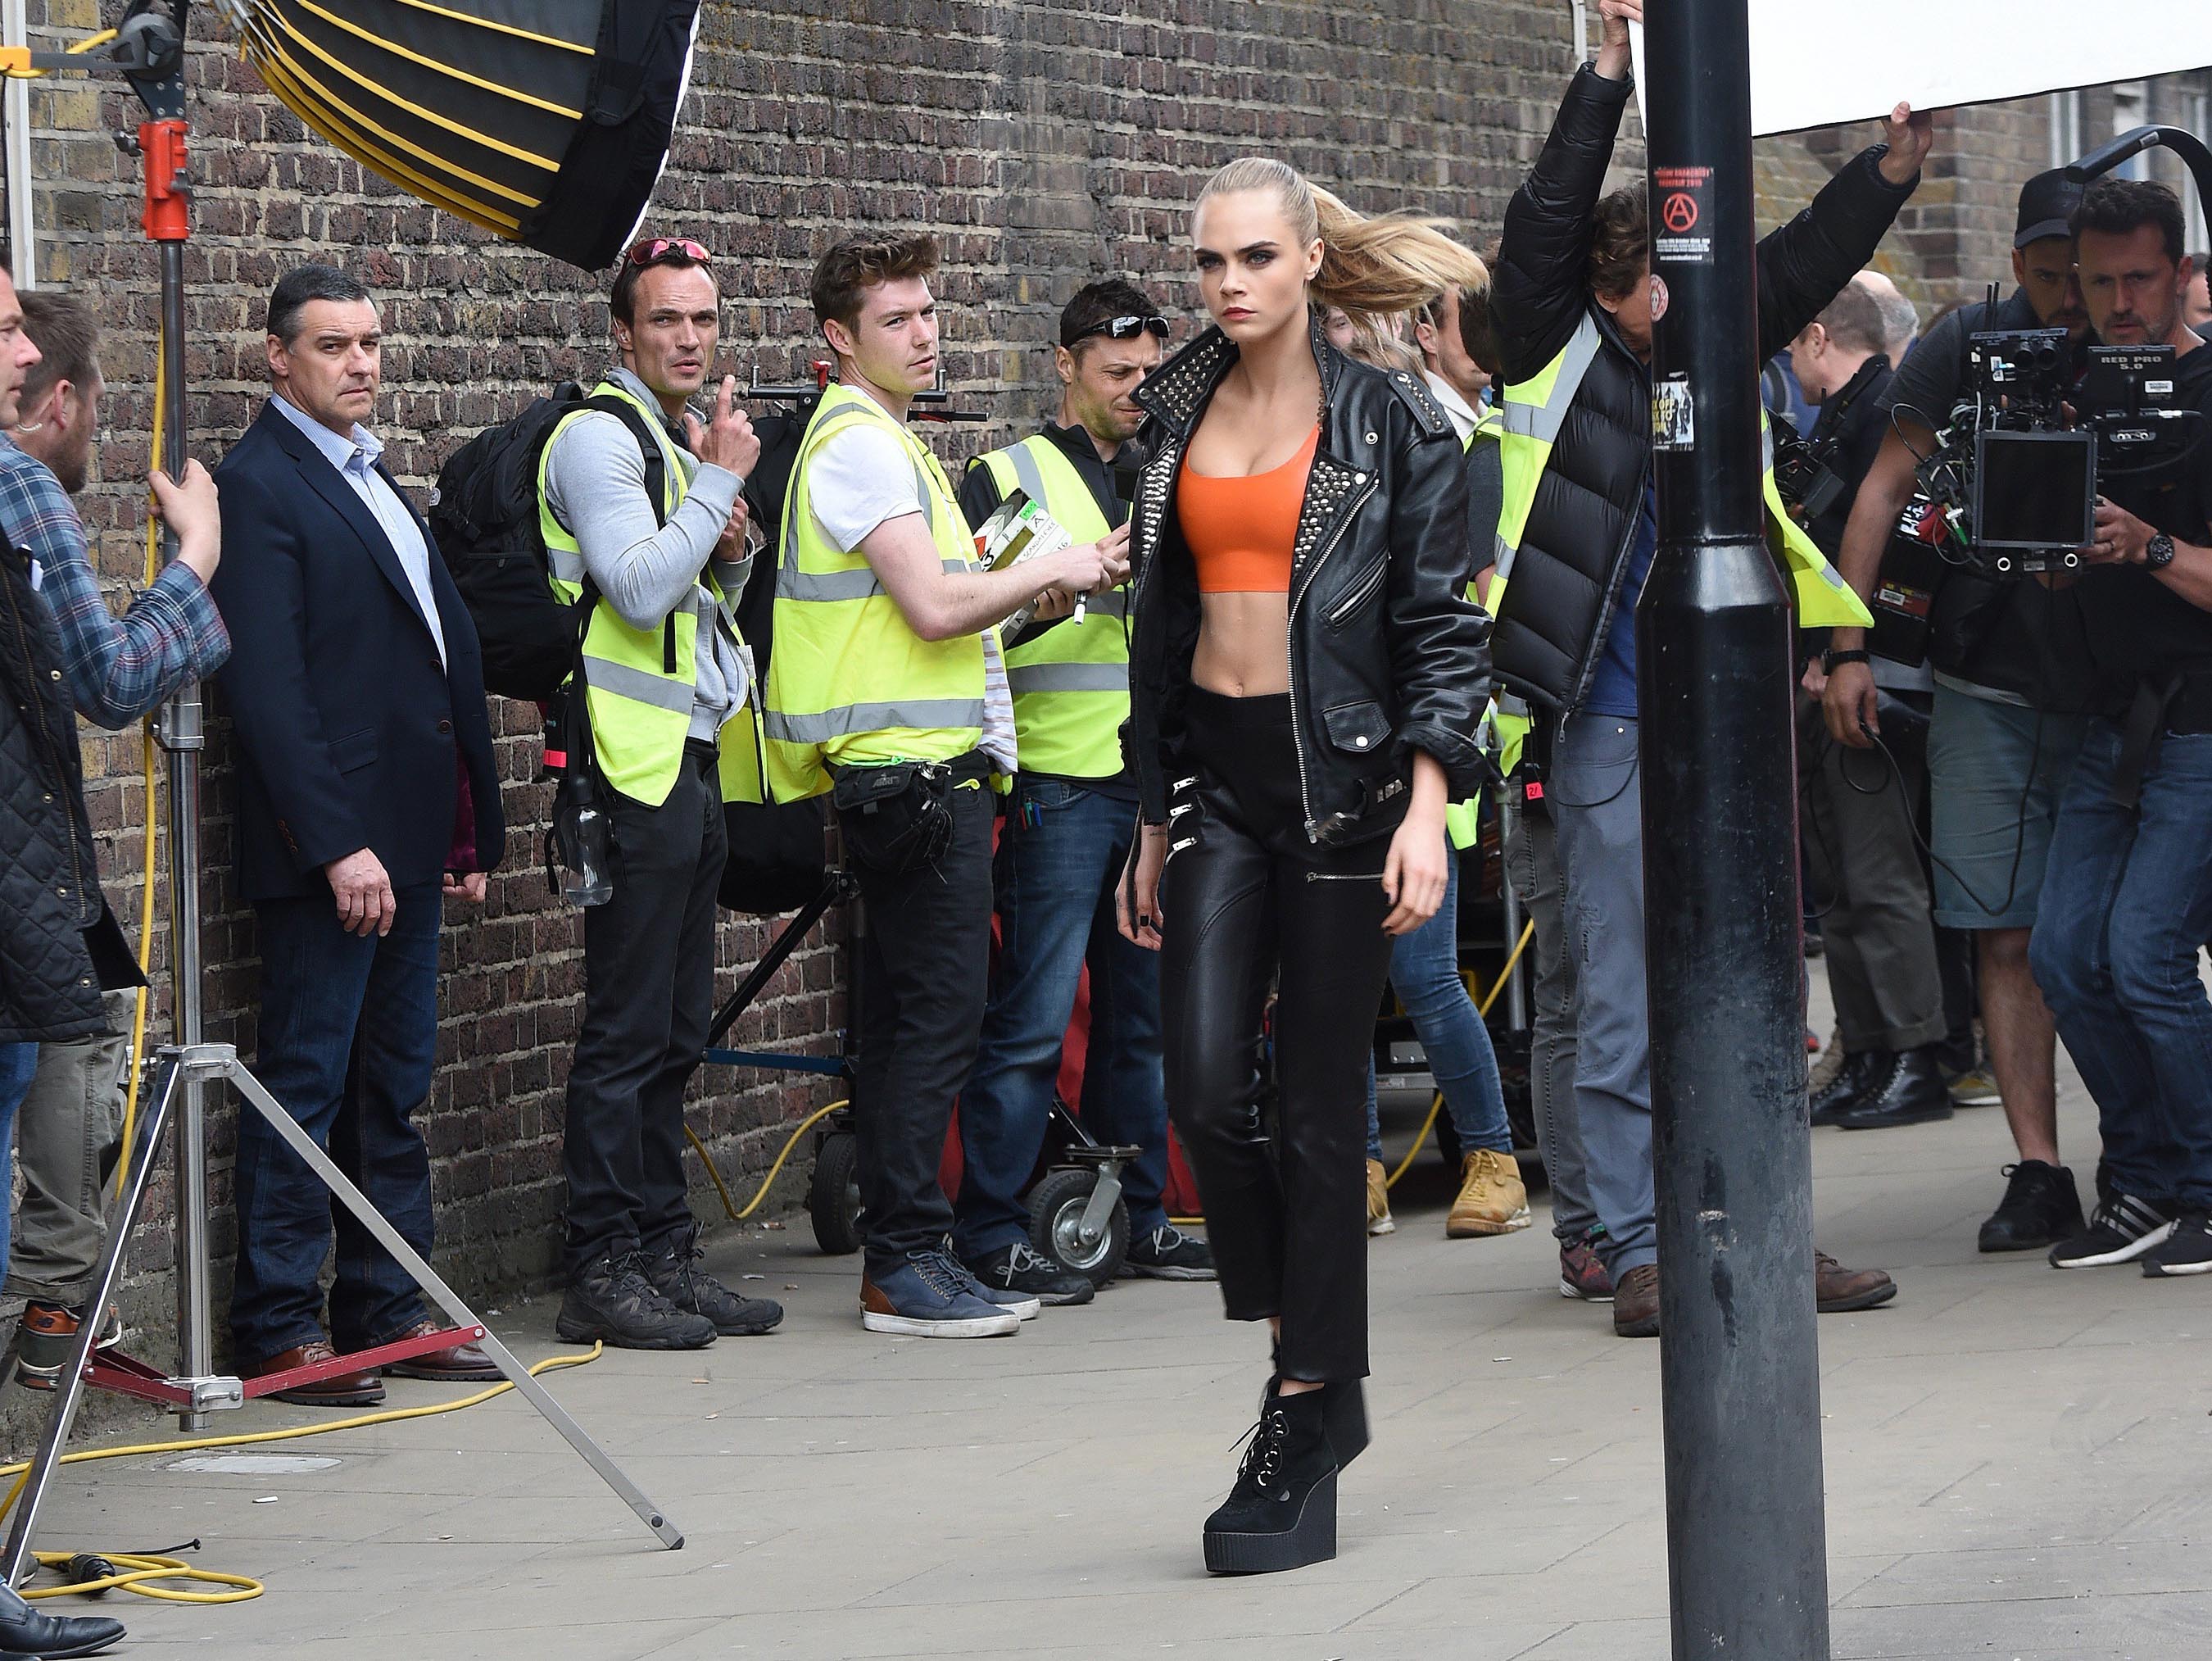 Cara Delevingne on set of a shooting for Rimmel London